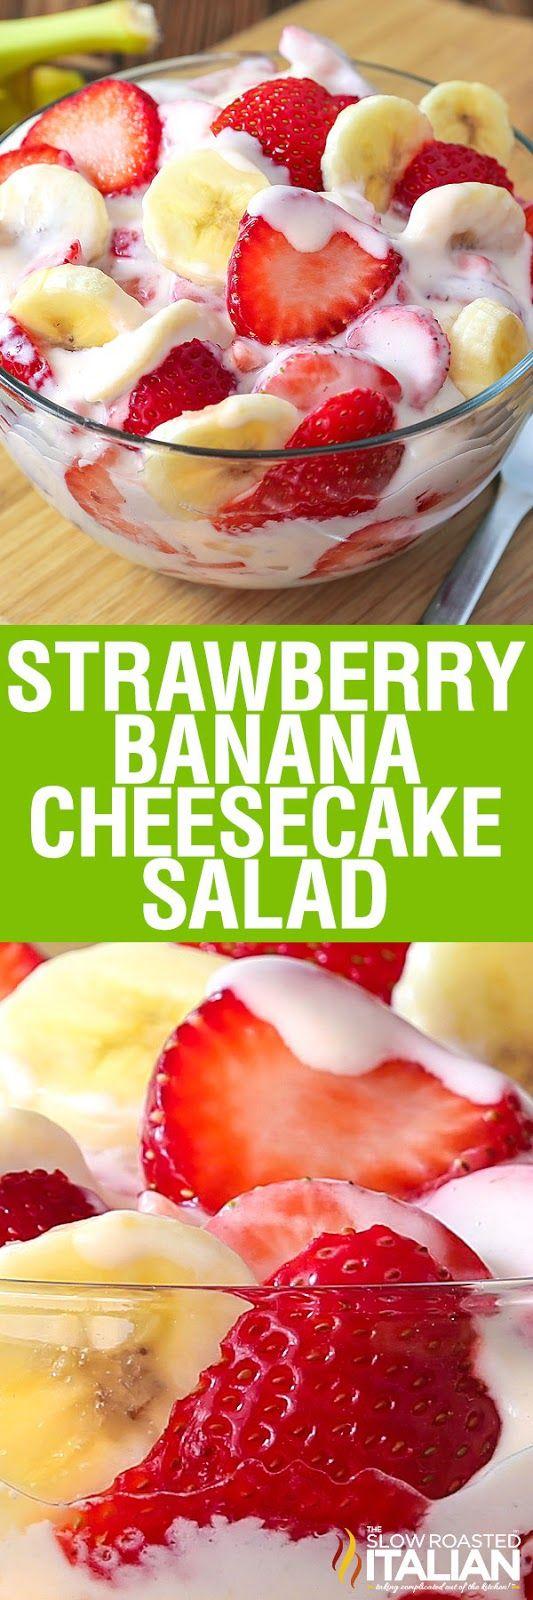 Wedding - Strawberry Banana Cheesecake Salad